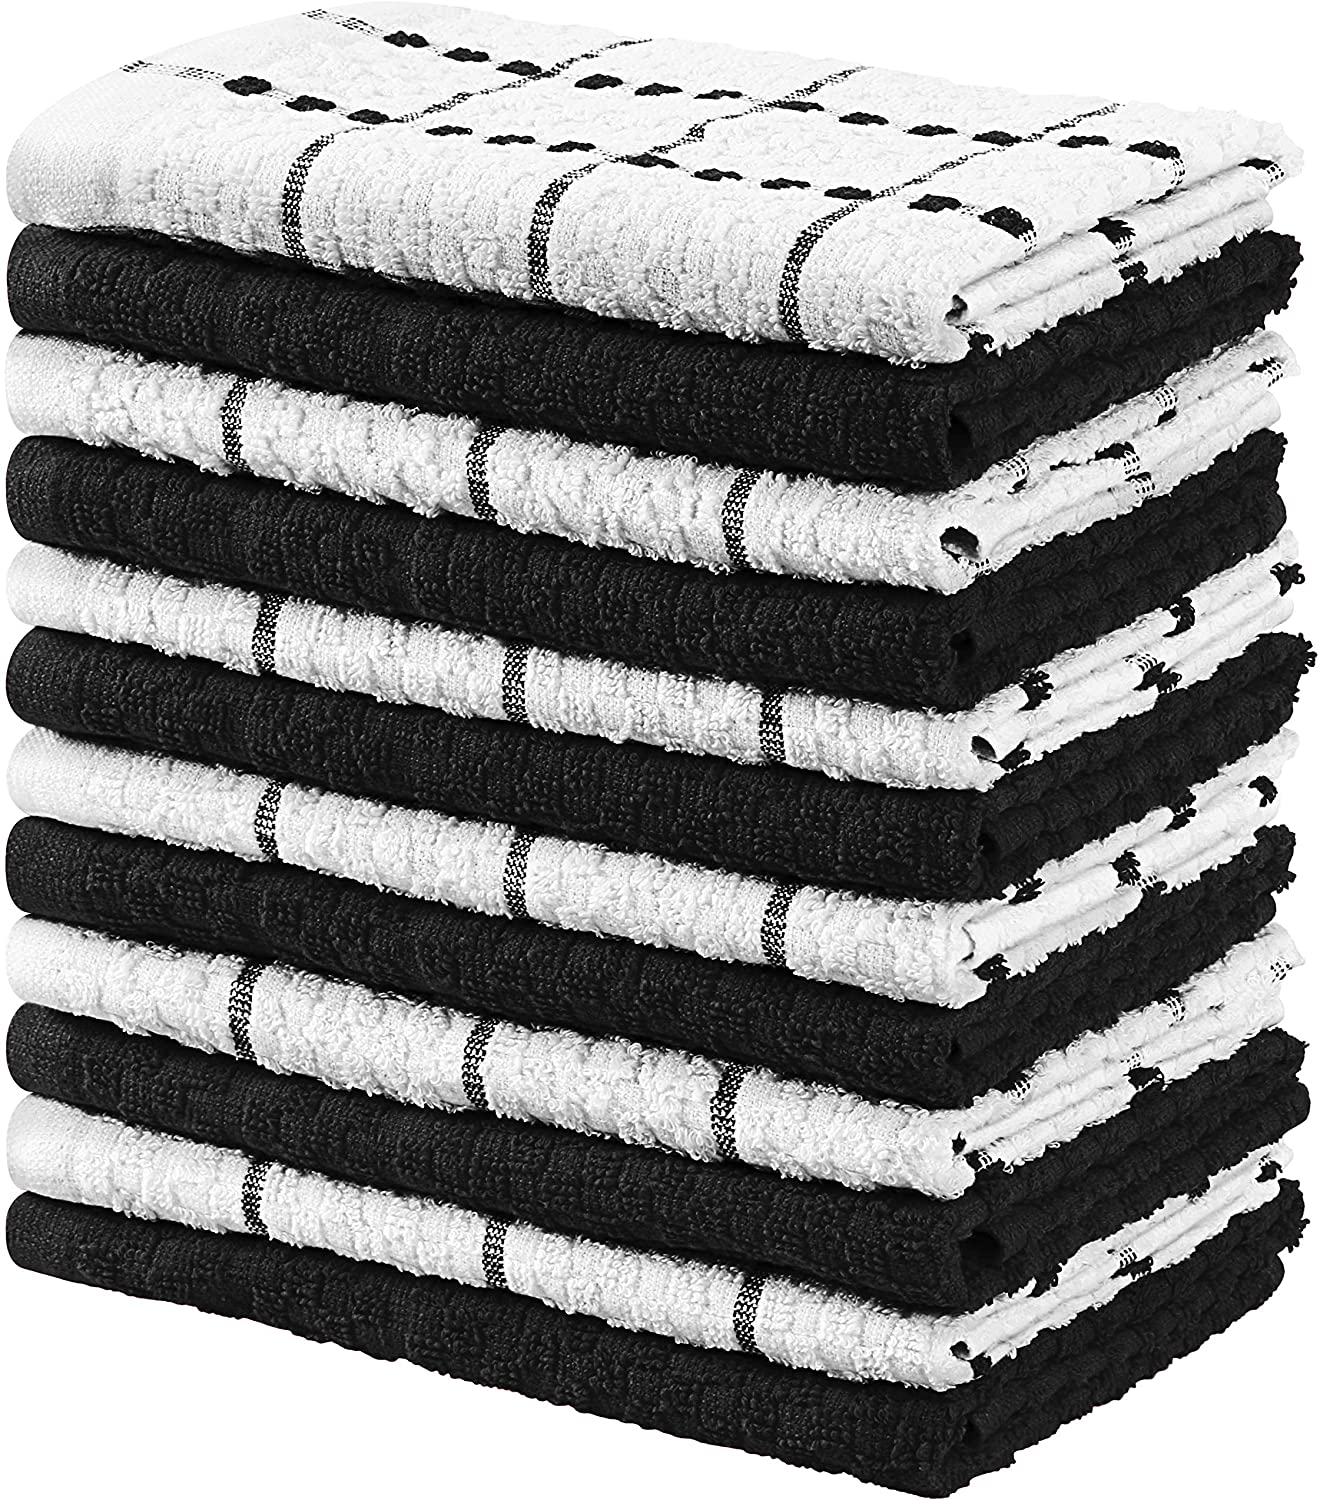 100% Ring Spun Cotton Dish Towels by Utopia Towels – Utopia Deals